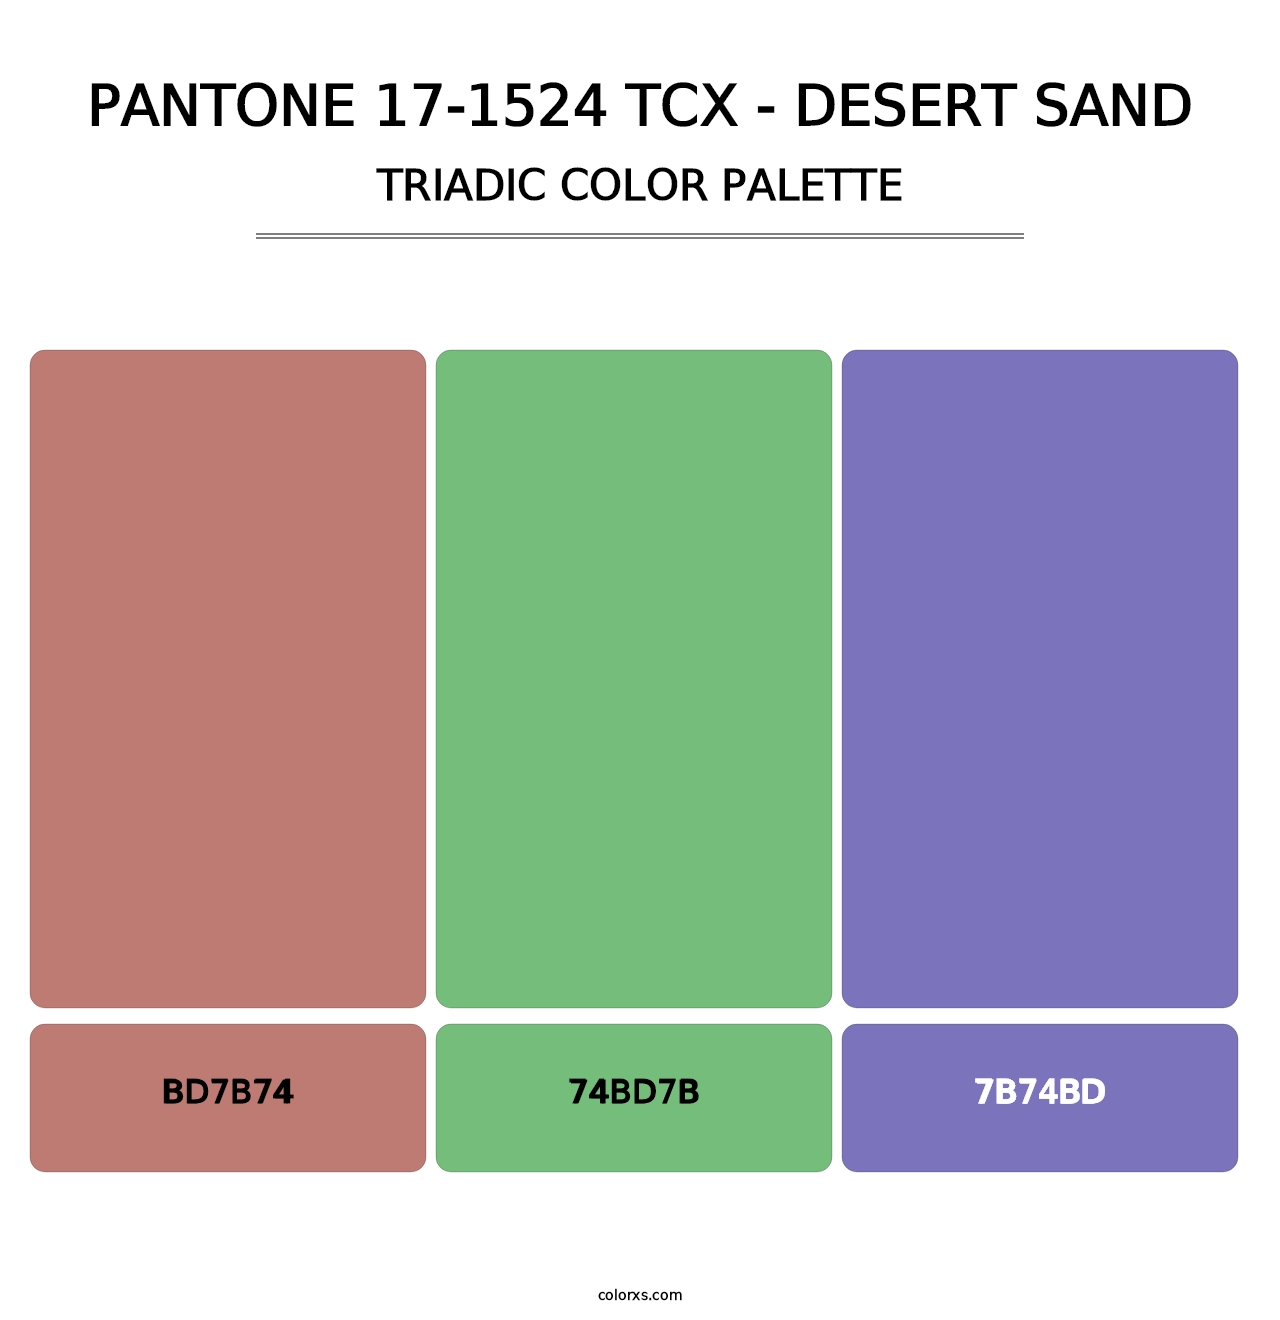 PANTONE 17-1524 TCX - Desert Sand - Triadic Color Palette